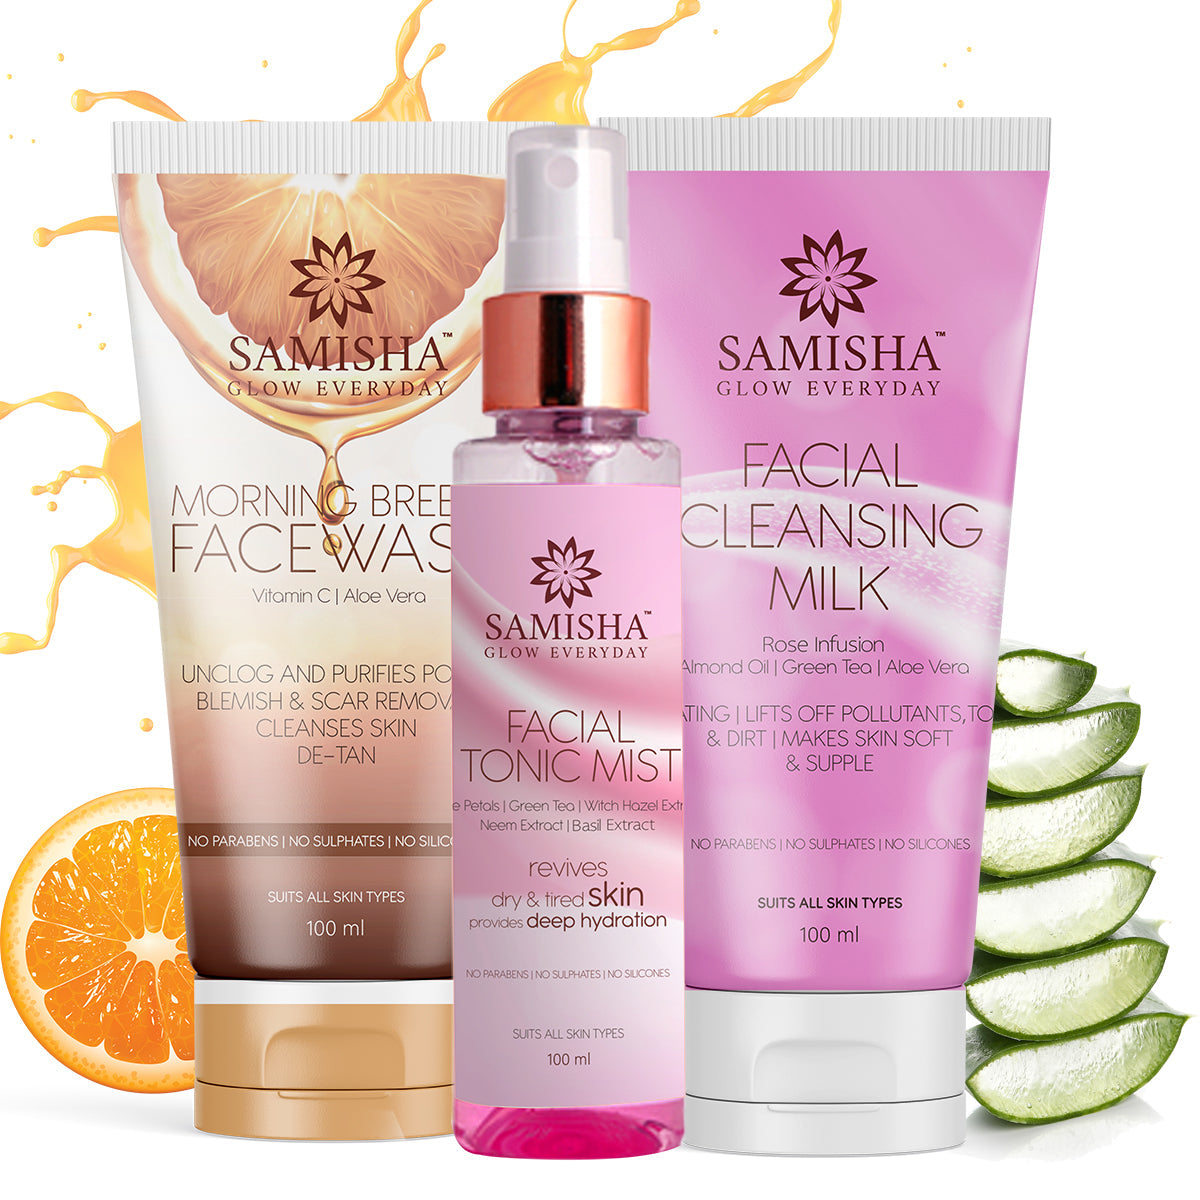 Samisha Organic Facial Tonic Mist, Cleansing Milk and Vitamin C Facewash Combo Pack